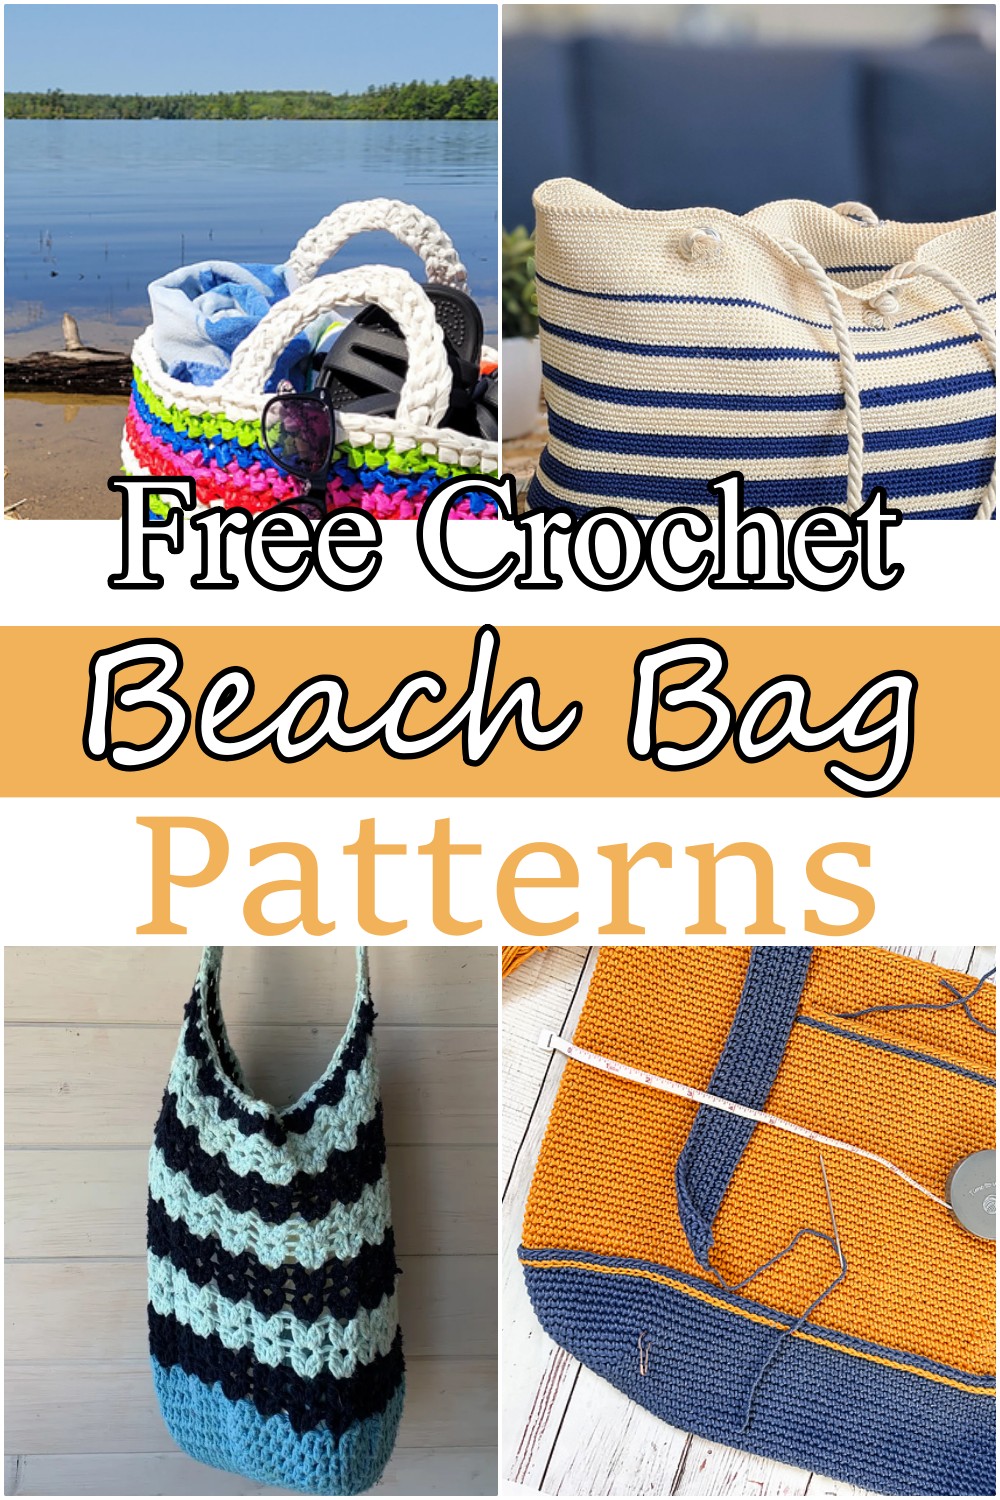 10 Free Crochet Beach Bag Patterns